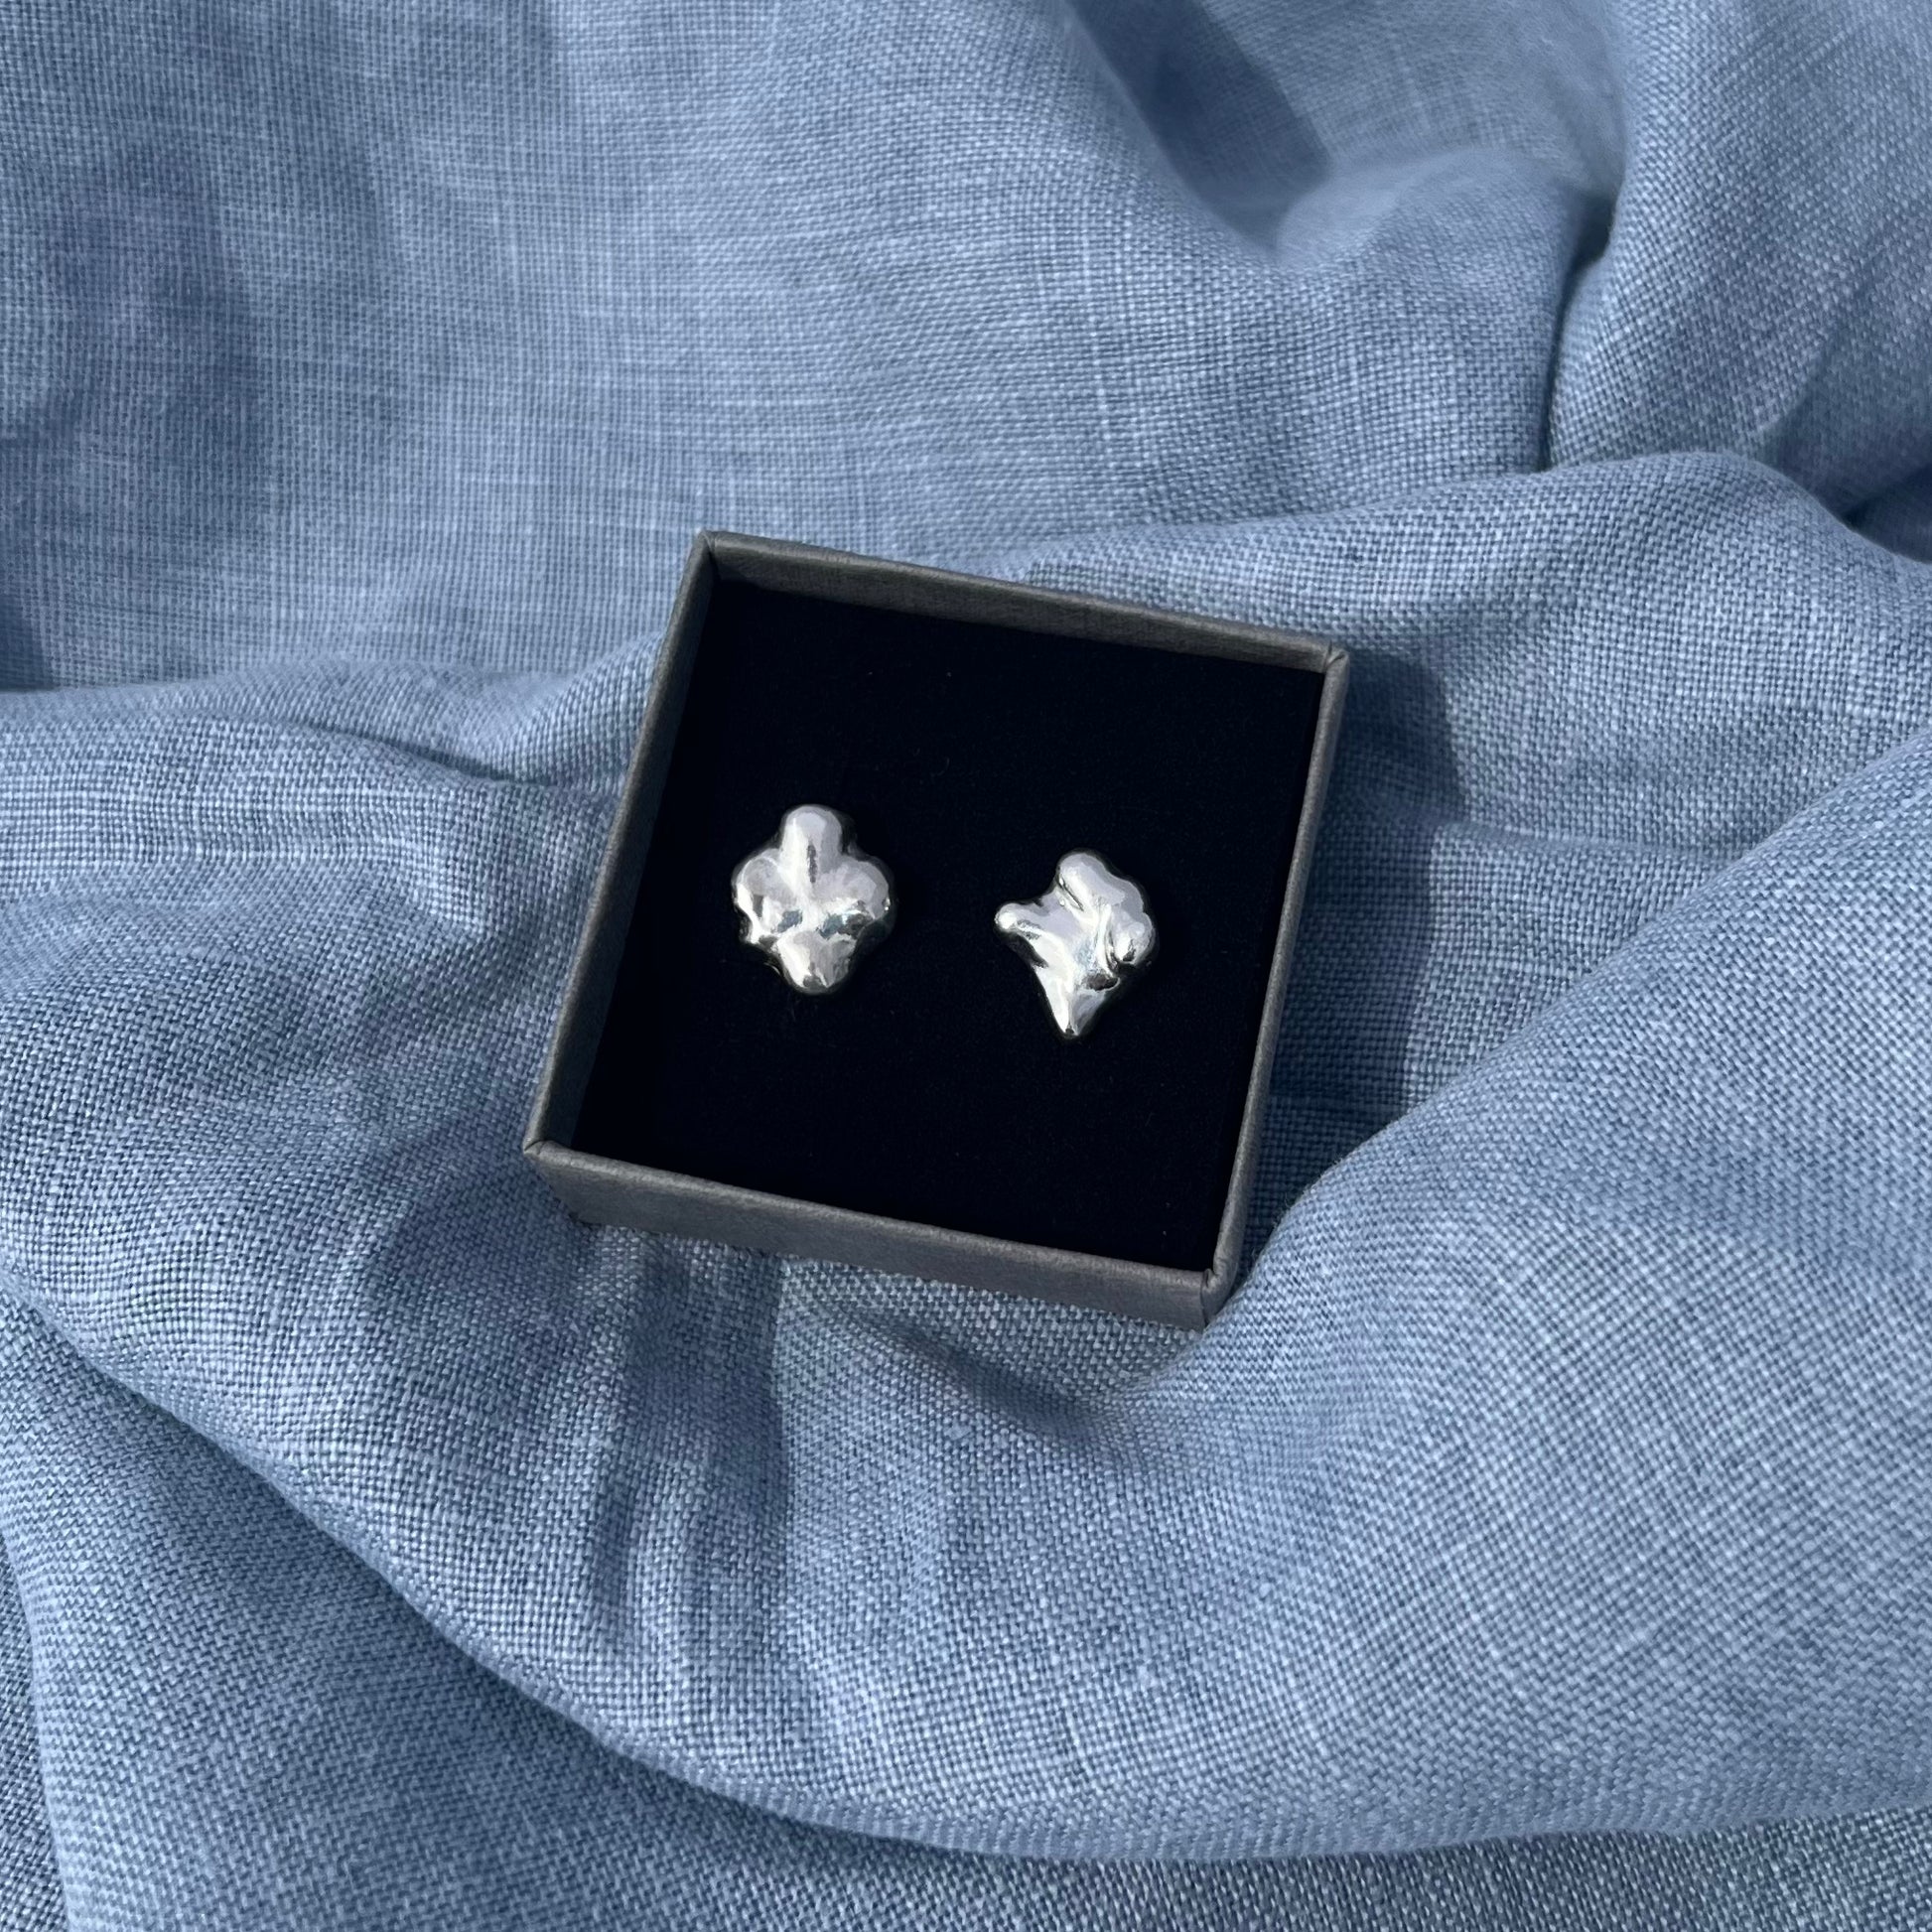 The sterling silver swirling stud earrings in a black box on a blue linen background.